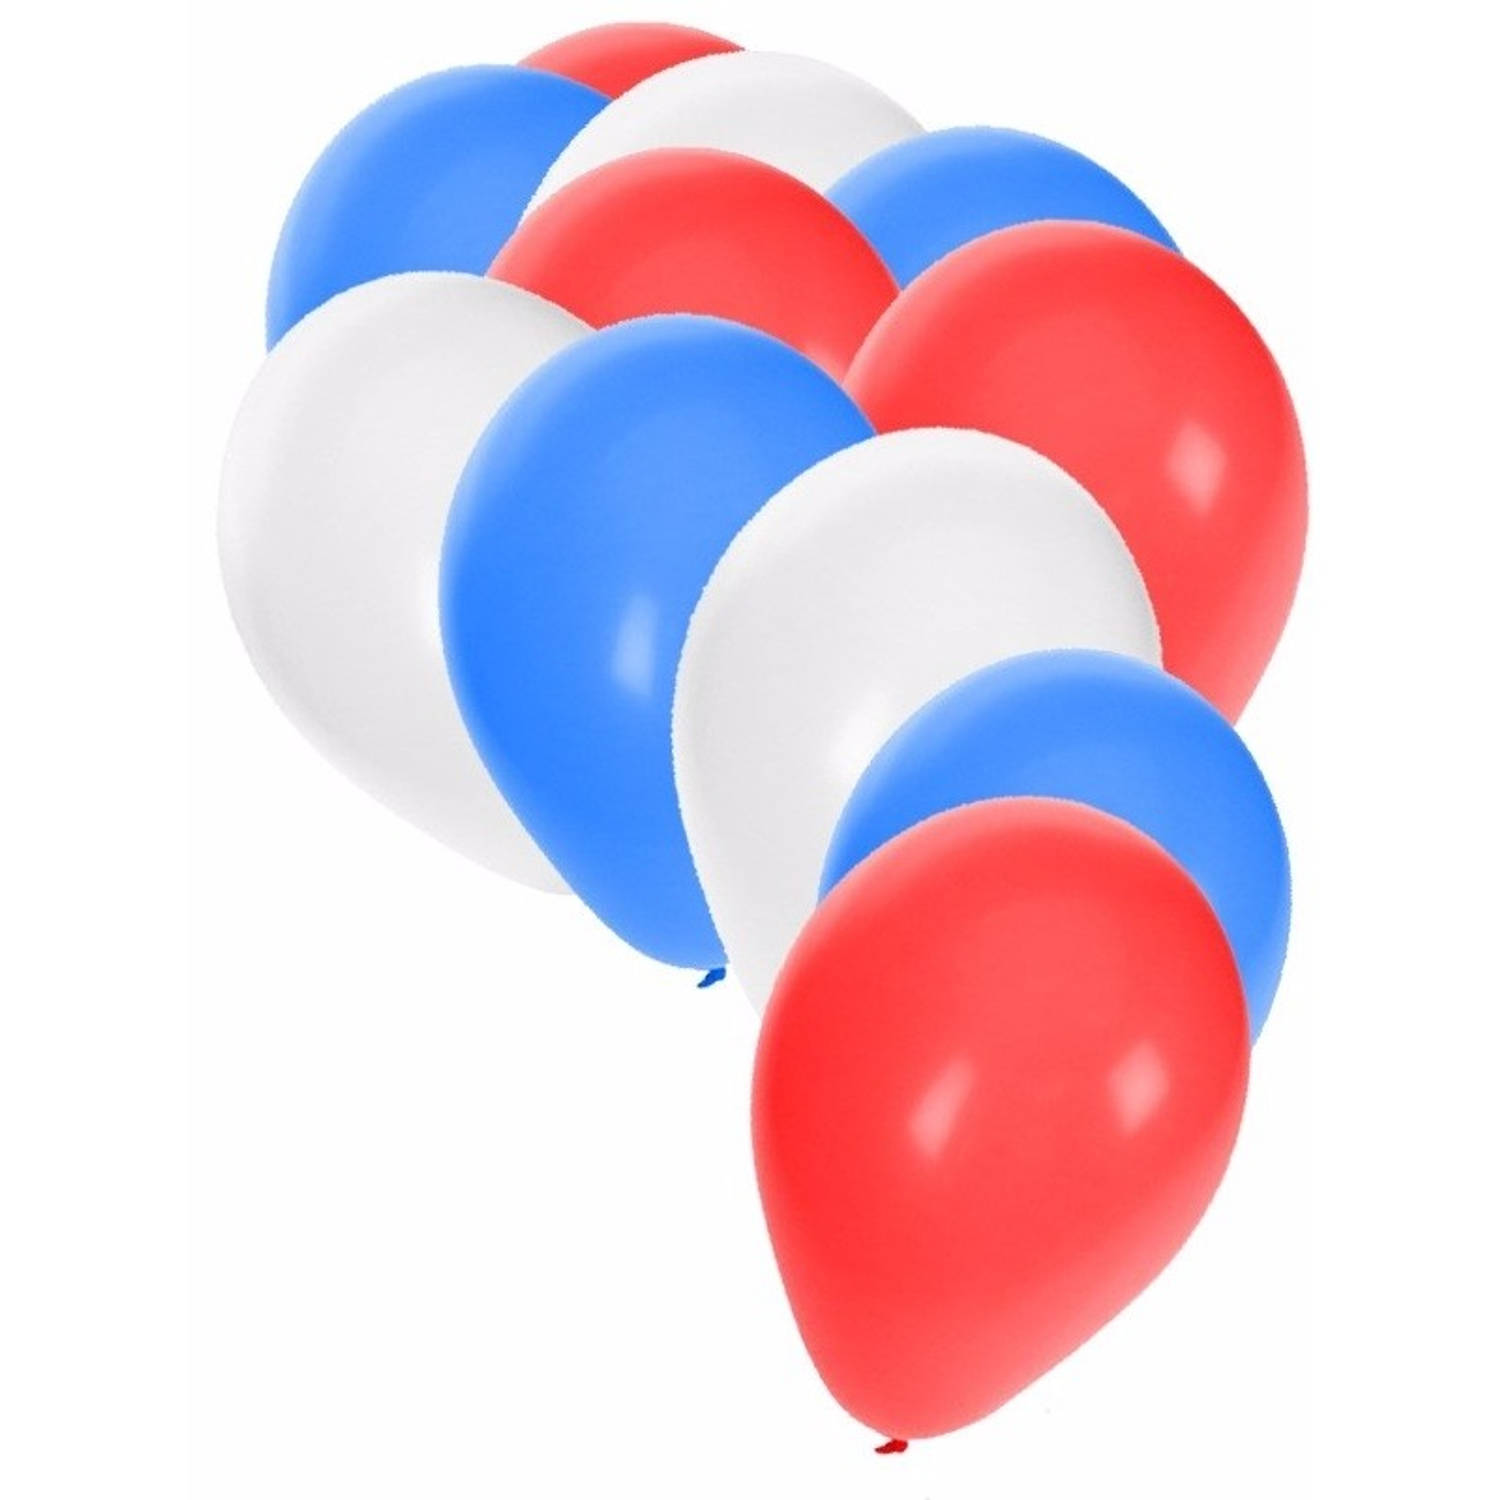 Berg tanker komedie Fan ballonnen rood/wit/blauw 30 stuks - Ballonnen | Blokker